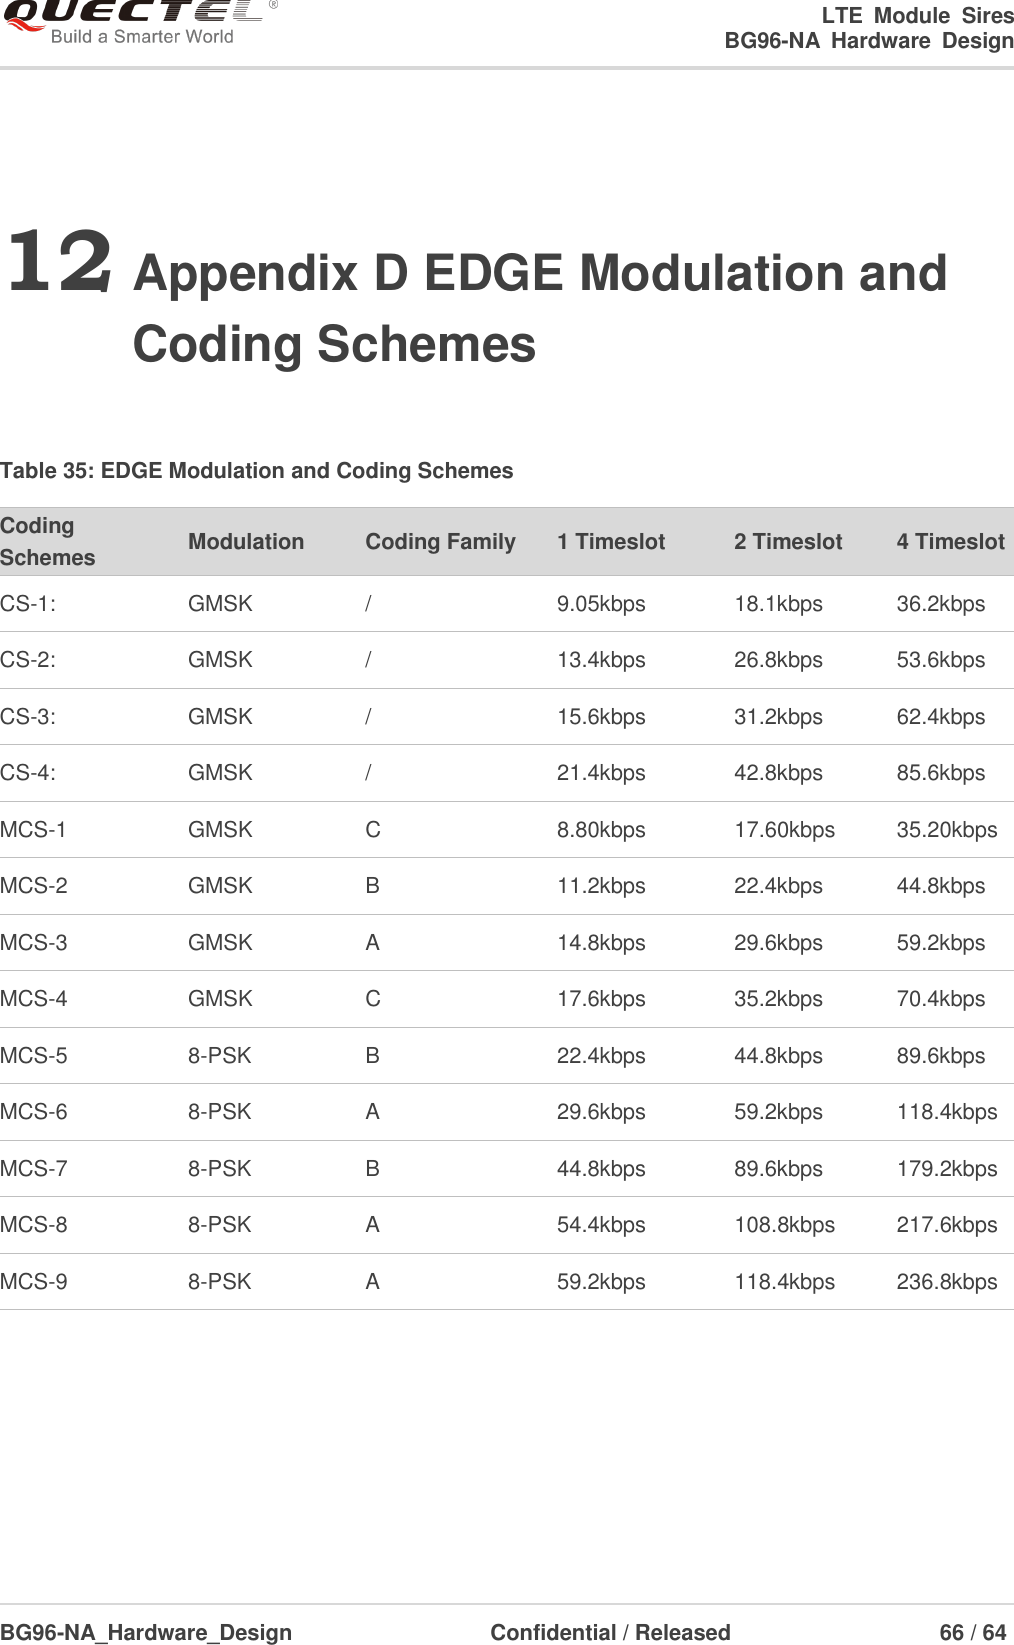 LTE  Module  Sires                                                                 BG96-NA  Hardware  Design  BG96-NA_Hardware_Design                                  Confidential / Released                             66 / 64    12 Appendix D EDGE Modulation and Coding Schemes  Table 35: EDGE Modulation and Coding Schemes Coding Schemes Modulation Coding Family 1 Timeslot 2 Timeslot 4 Timeslot CS-1: GMSK / 9.05kbps 18.1kbps 36.2kbps CS-2: GMSK / 13.4kbps 26.8kbps 53.6kbps CS-3: GMSK / 15.6kbps 31.2kbps 62.4kbps CS-4: GMSK / 21.4kbps 42.8kbps 85.6kbps MCS-1 GMSK C 8.80kbps 17.60kbps 35.20kbps MCS-2 GMSK B 11.2kbps 22.4kbps 44.8kbps MCS-3 GMSK A 14.8kbps 29.6kbps 59.2kbps MCS-4 GMSK C 17.6kbps 35.2kbps 70.4kbps MCS-5 8-PSK B 22.4kbps 44.8kbps 89.6kbps MCS-6 8-PSK A 29.6kbps 59.2kbps 118.4kbps MCS-7 8-PSK B 44.8kbps 89.6kbps 179.2kbps MCS-8 8-PSK A 54.4kbps 108.8kbps 217.6kbps MCS-9 8-PSK A 59.2kbps 118.4kbps 236.8kbps      